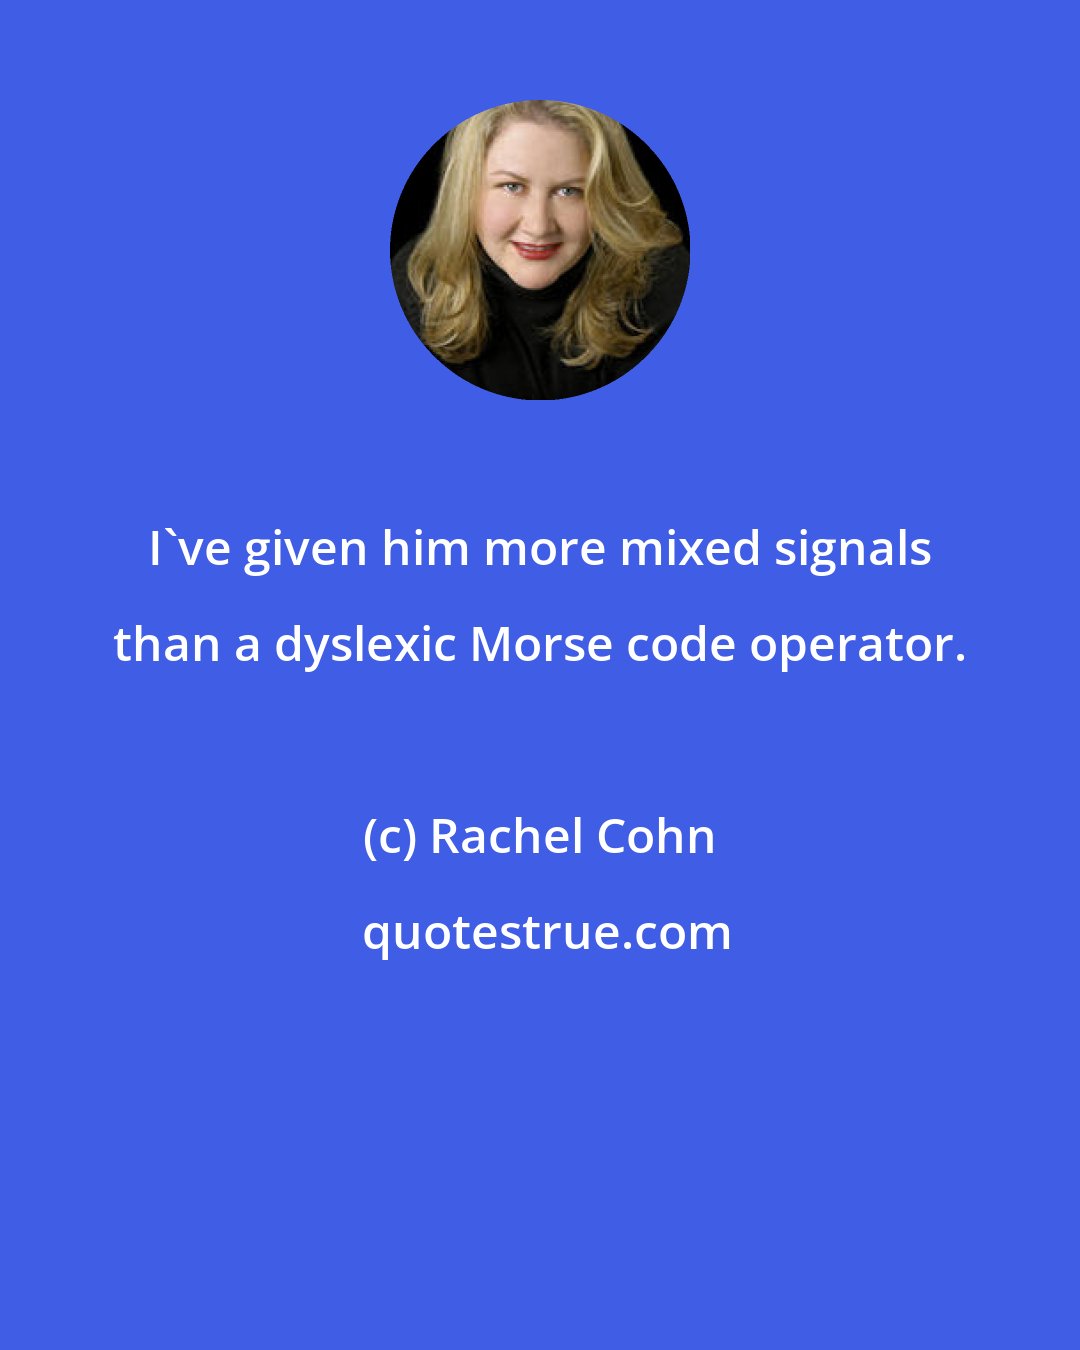 Rachel Cohn: I've given him more mixed signals than a dyslexic Morse code operator.